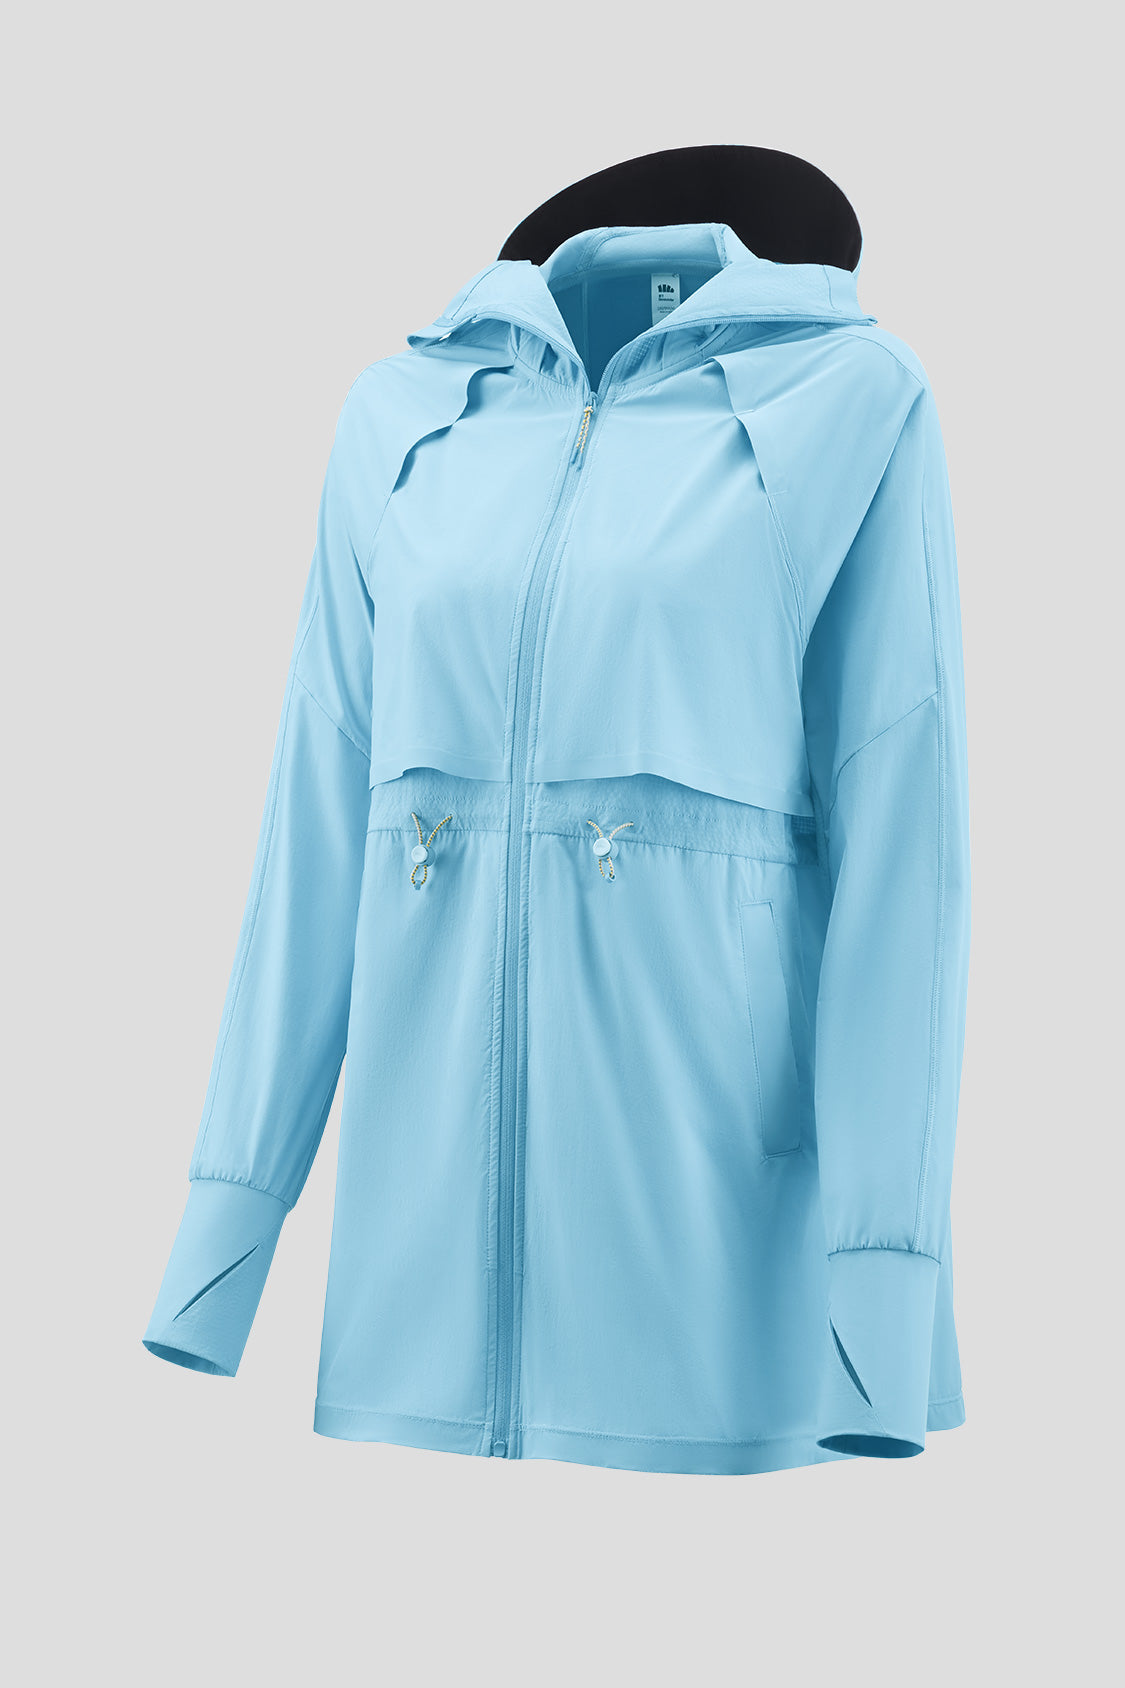 beneunder yunzi yee  women's ultra-lightweight mid-length sun protection clothing UPF50+ #color_sky lake blues